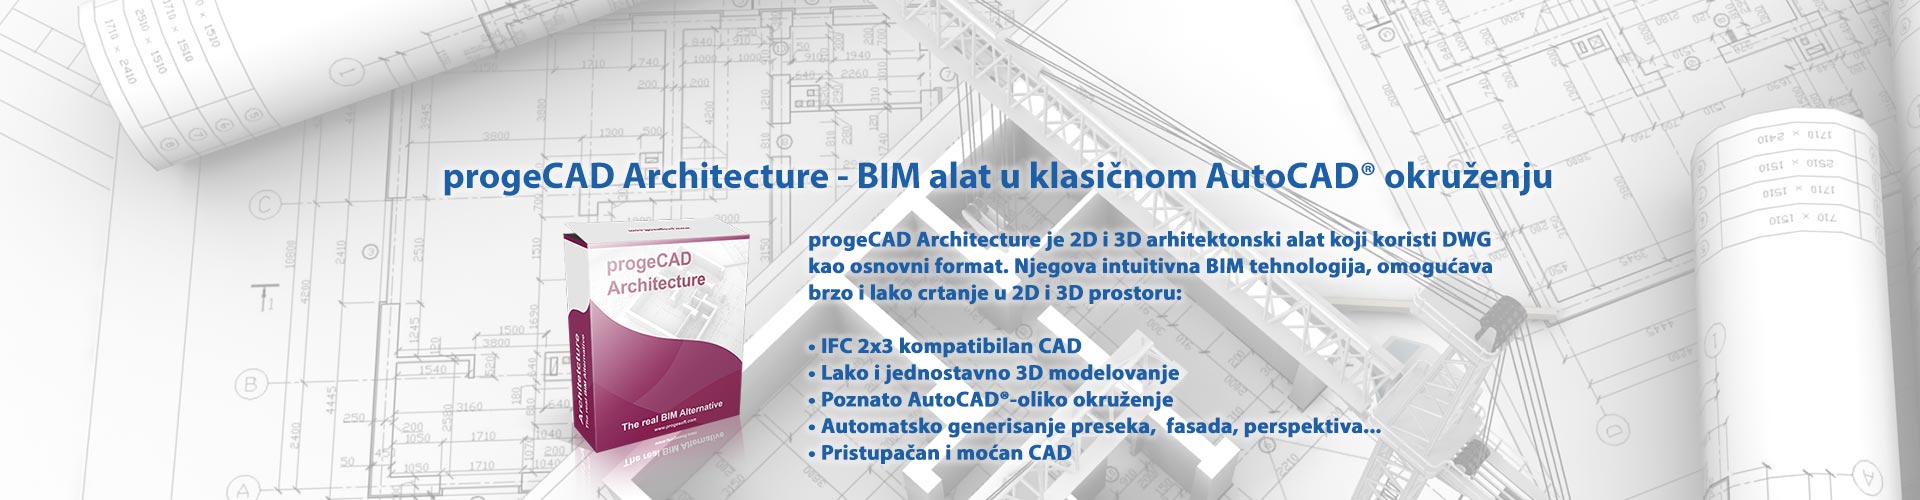 progeCAD Architecture - BIM alat